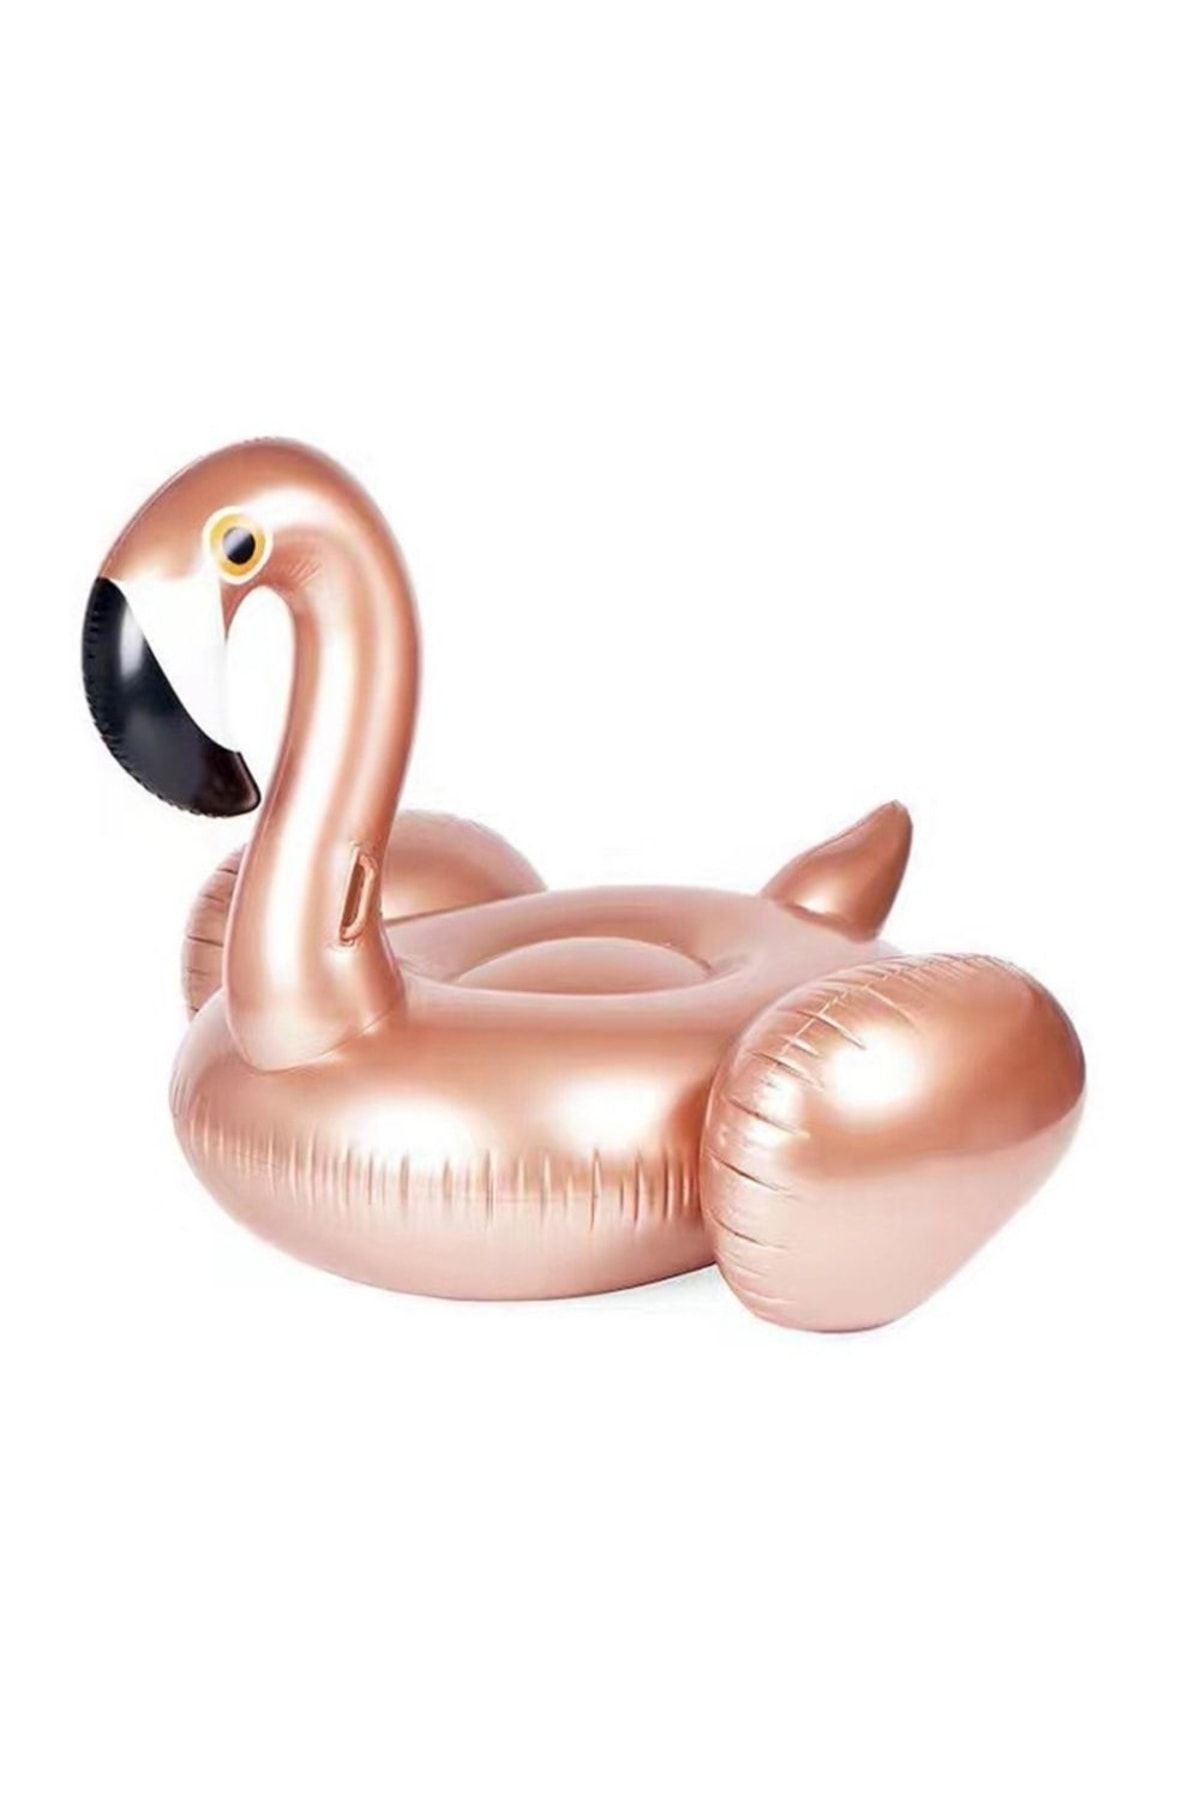 BERMUDA Dev Flamingo Binici Rose Gold 192x180 Cm - 1710018